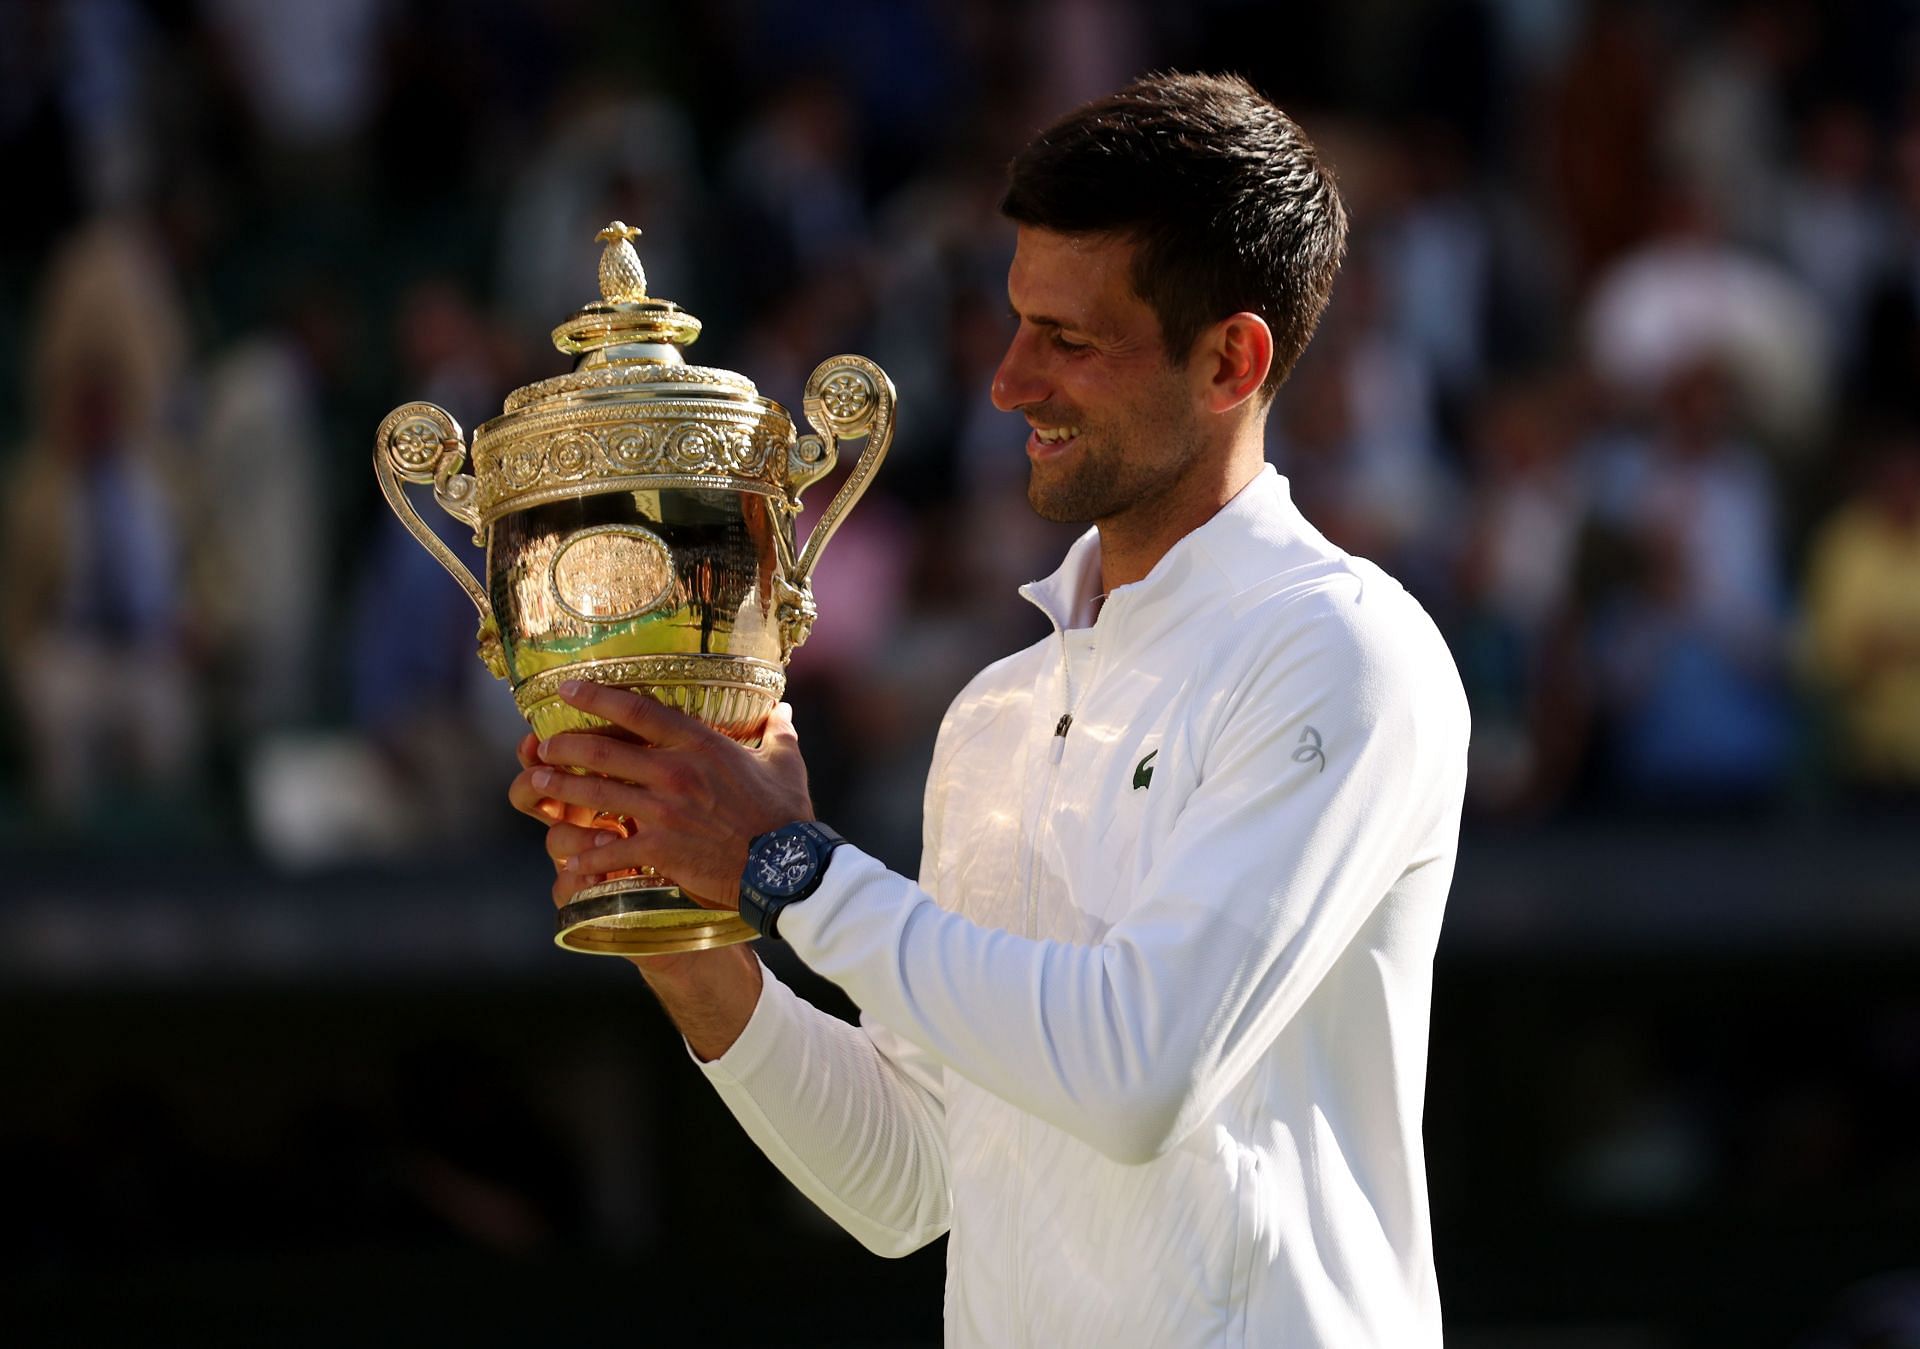 Novak Djokovic pocketed his 21st Grand Slam title at Wimbledon last July